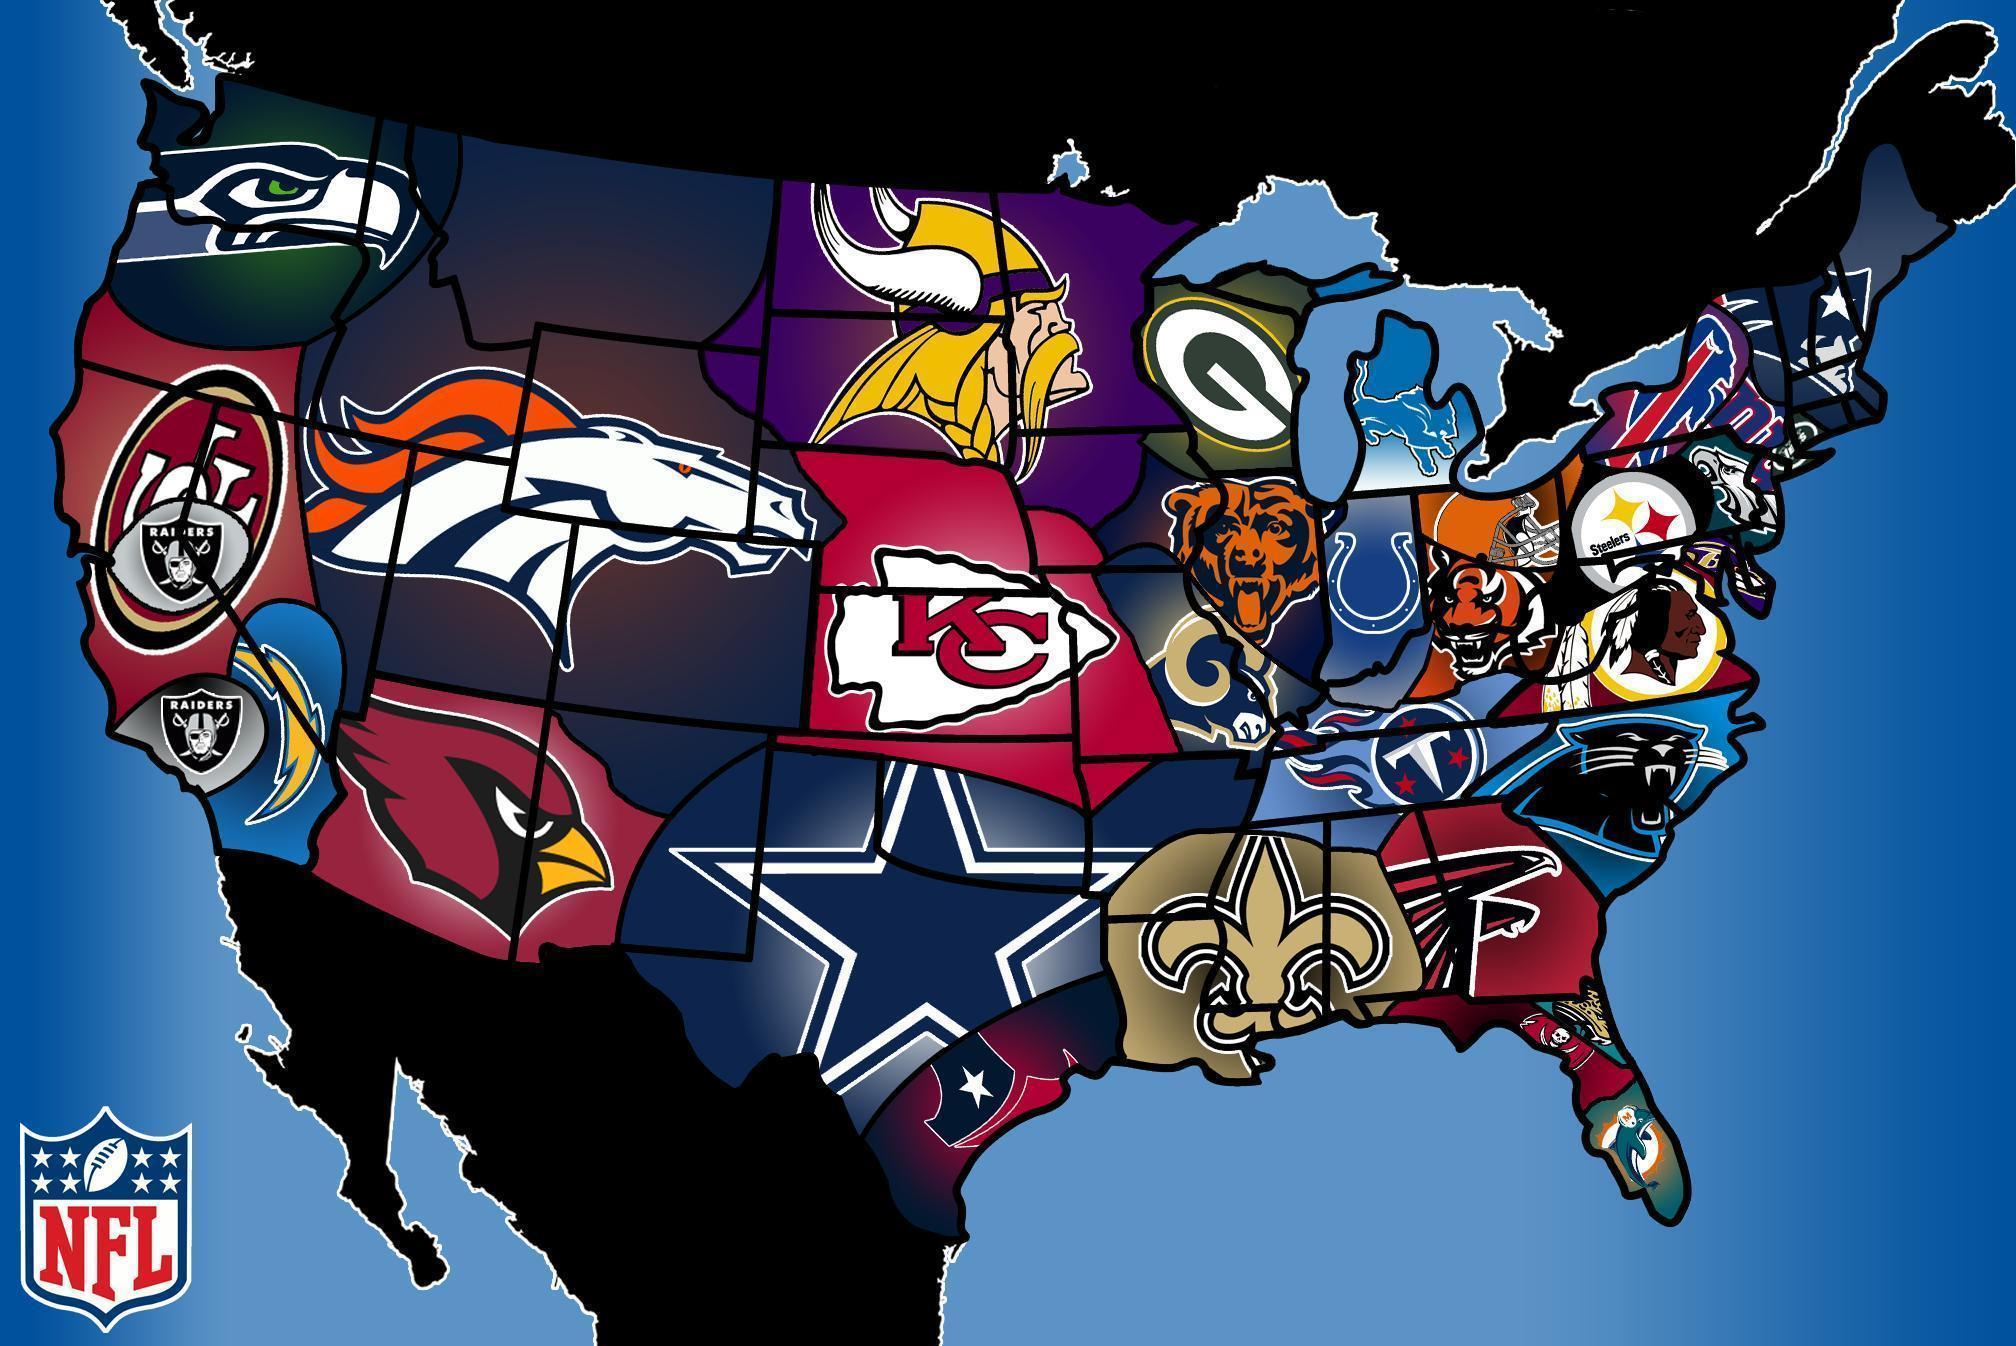 Football: NFL Pro Bowl 2015 in Arizona opwarmertje Super Bowl